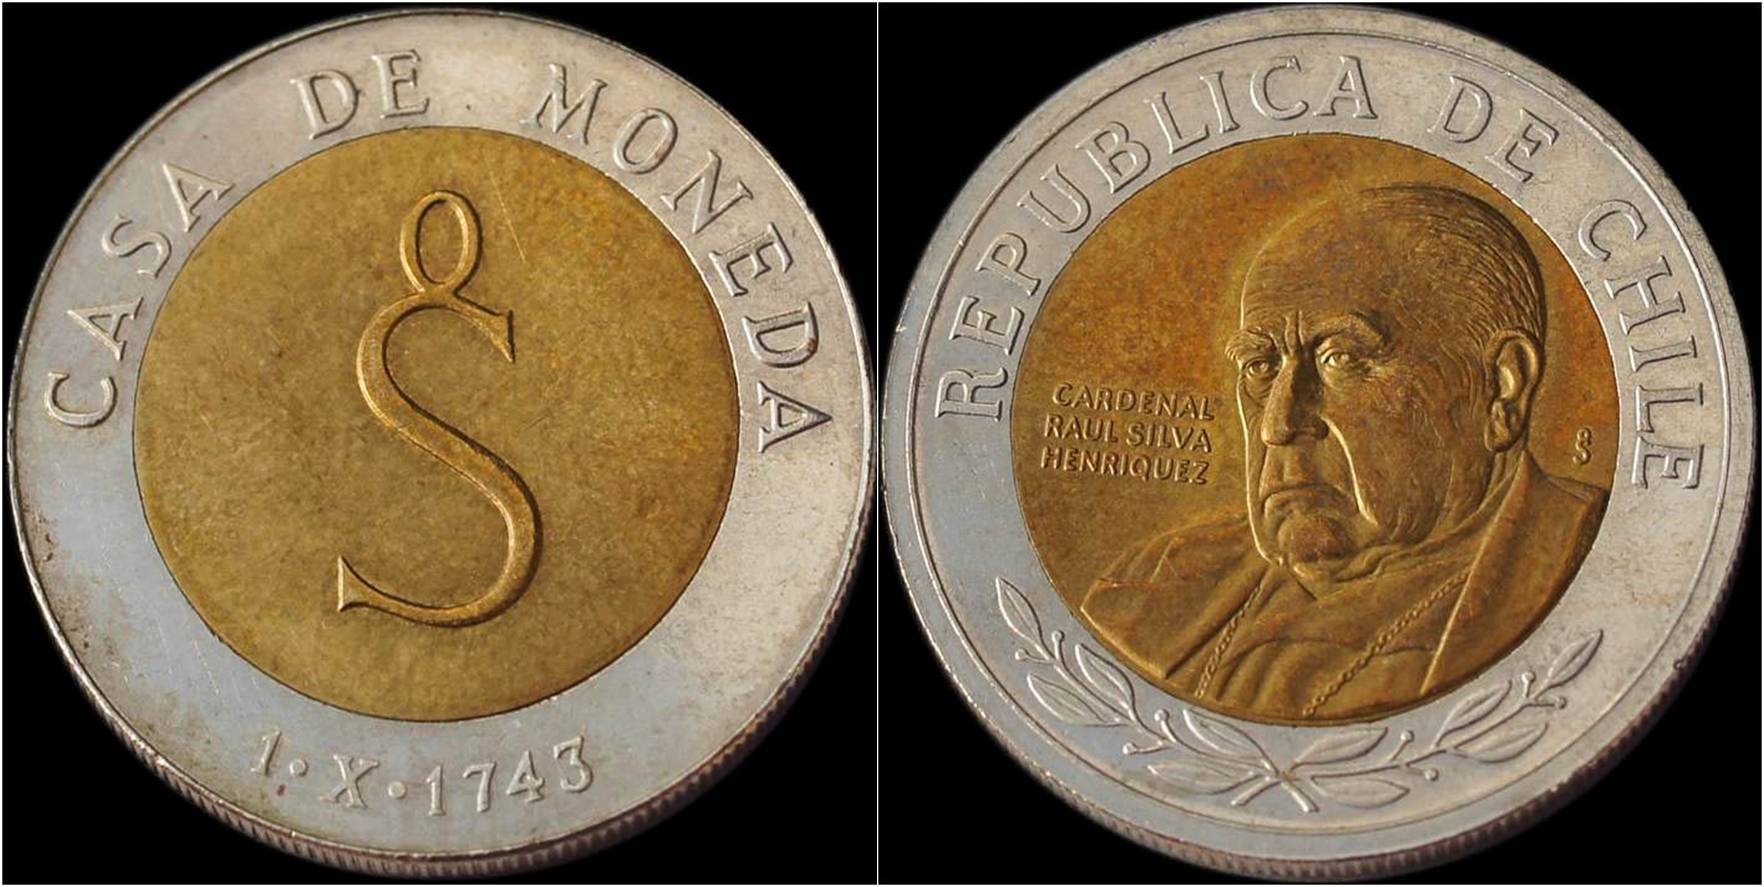 Chile 2003 500 pesos pattern.jpg